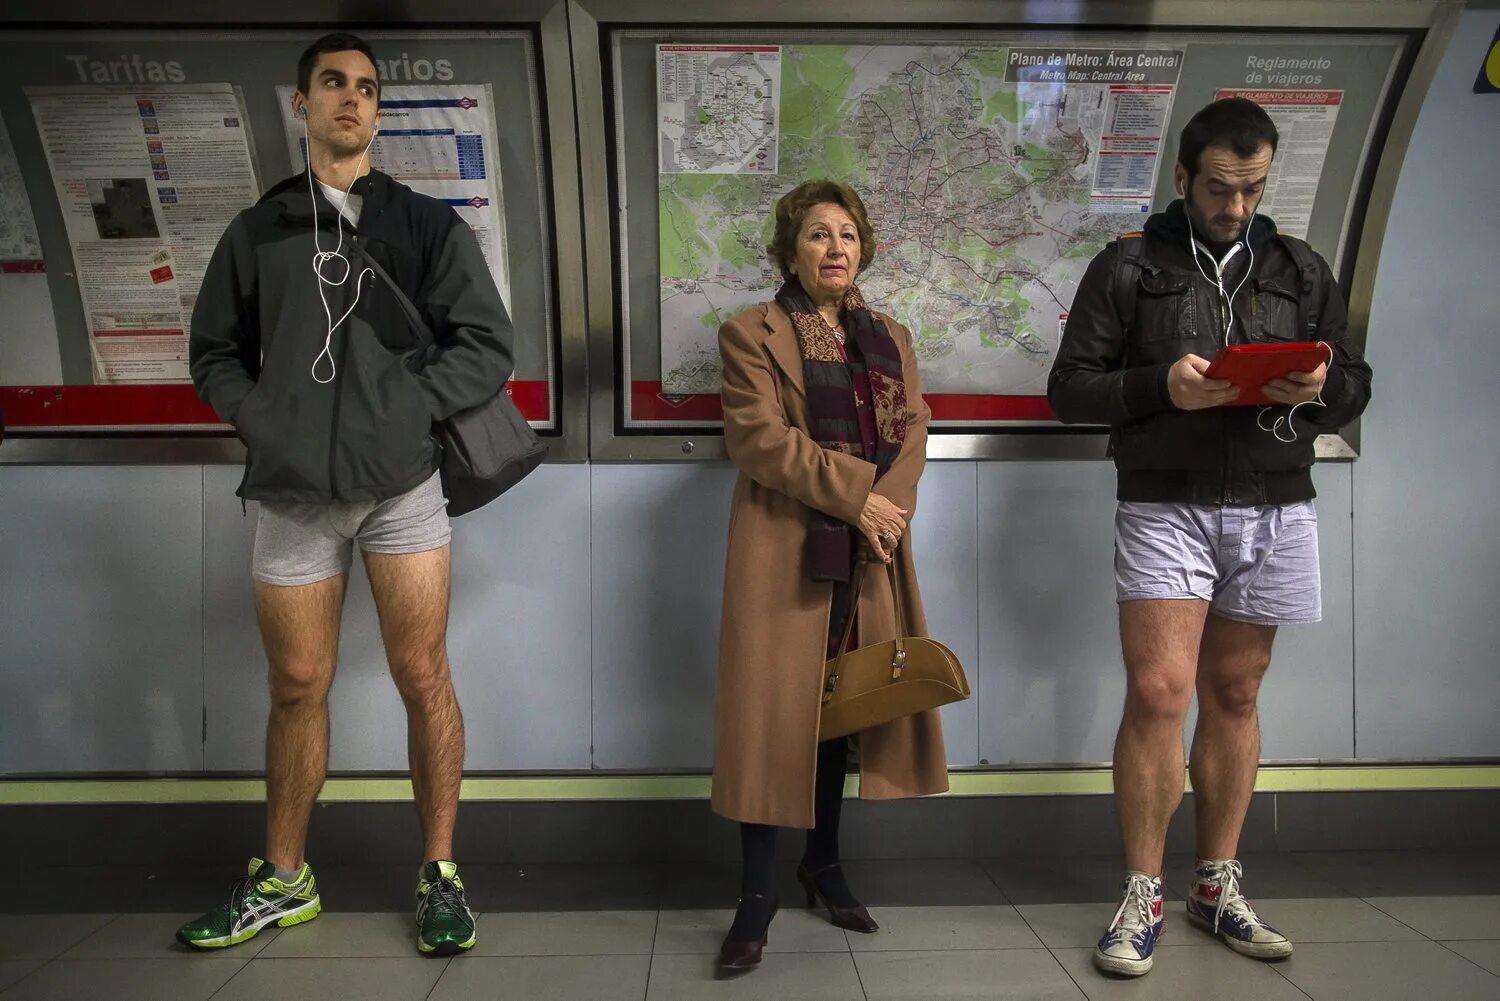 No Pants Subway Ride 2014. Джон Туртурро без штанов в трансформерах. В метро без штанов. Остался без штанов. Сон без штанов